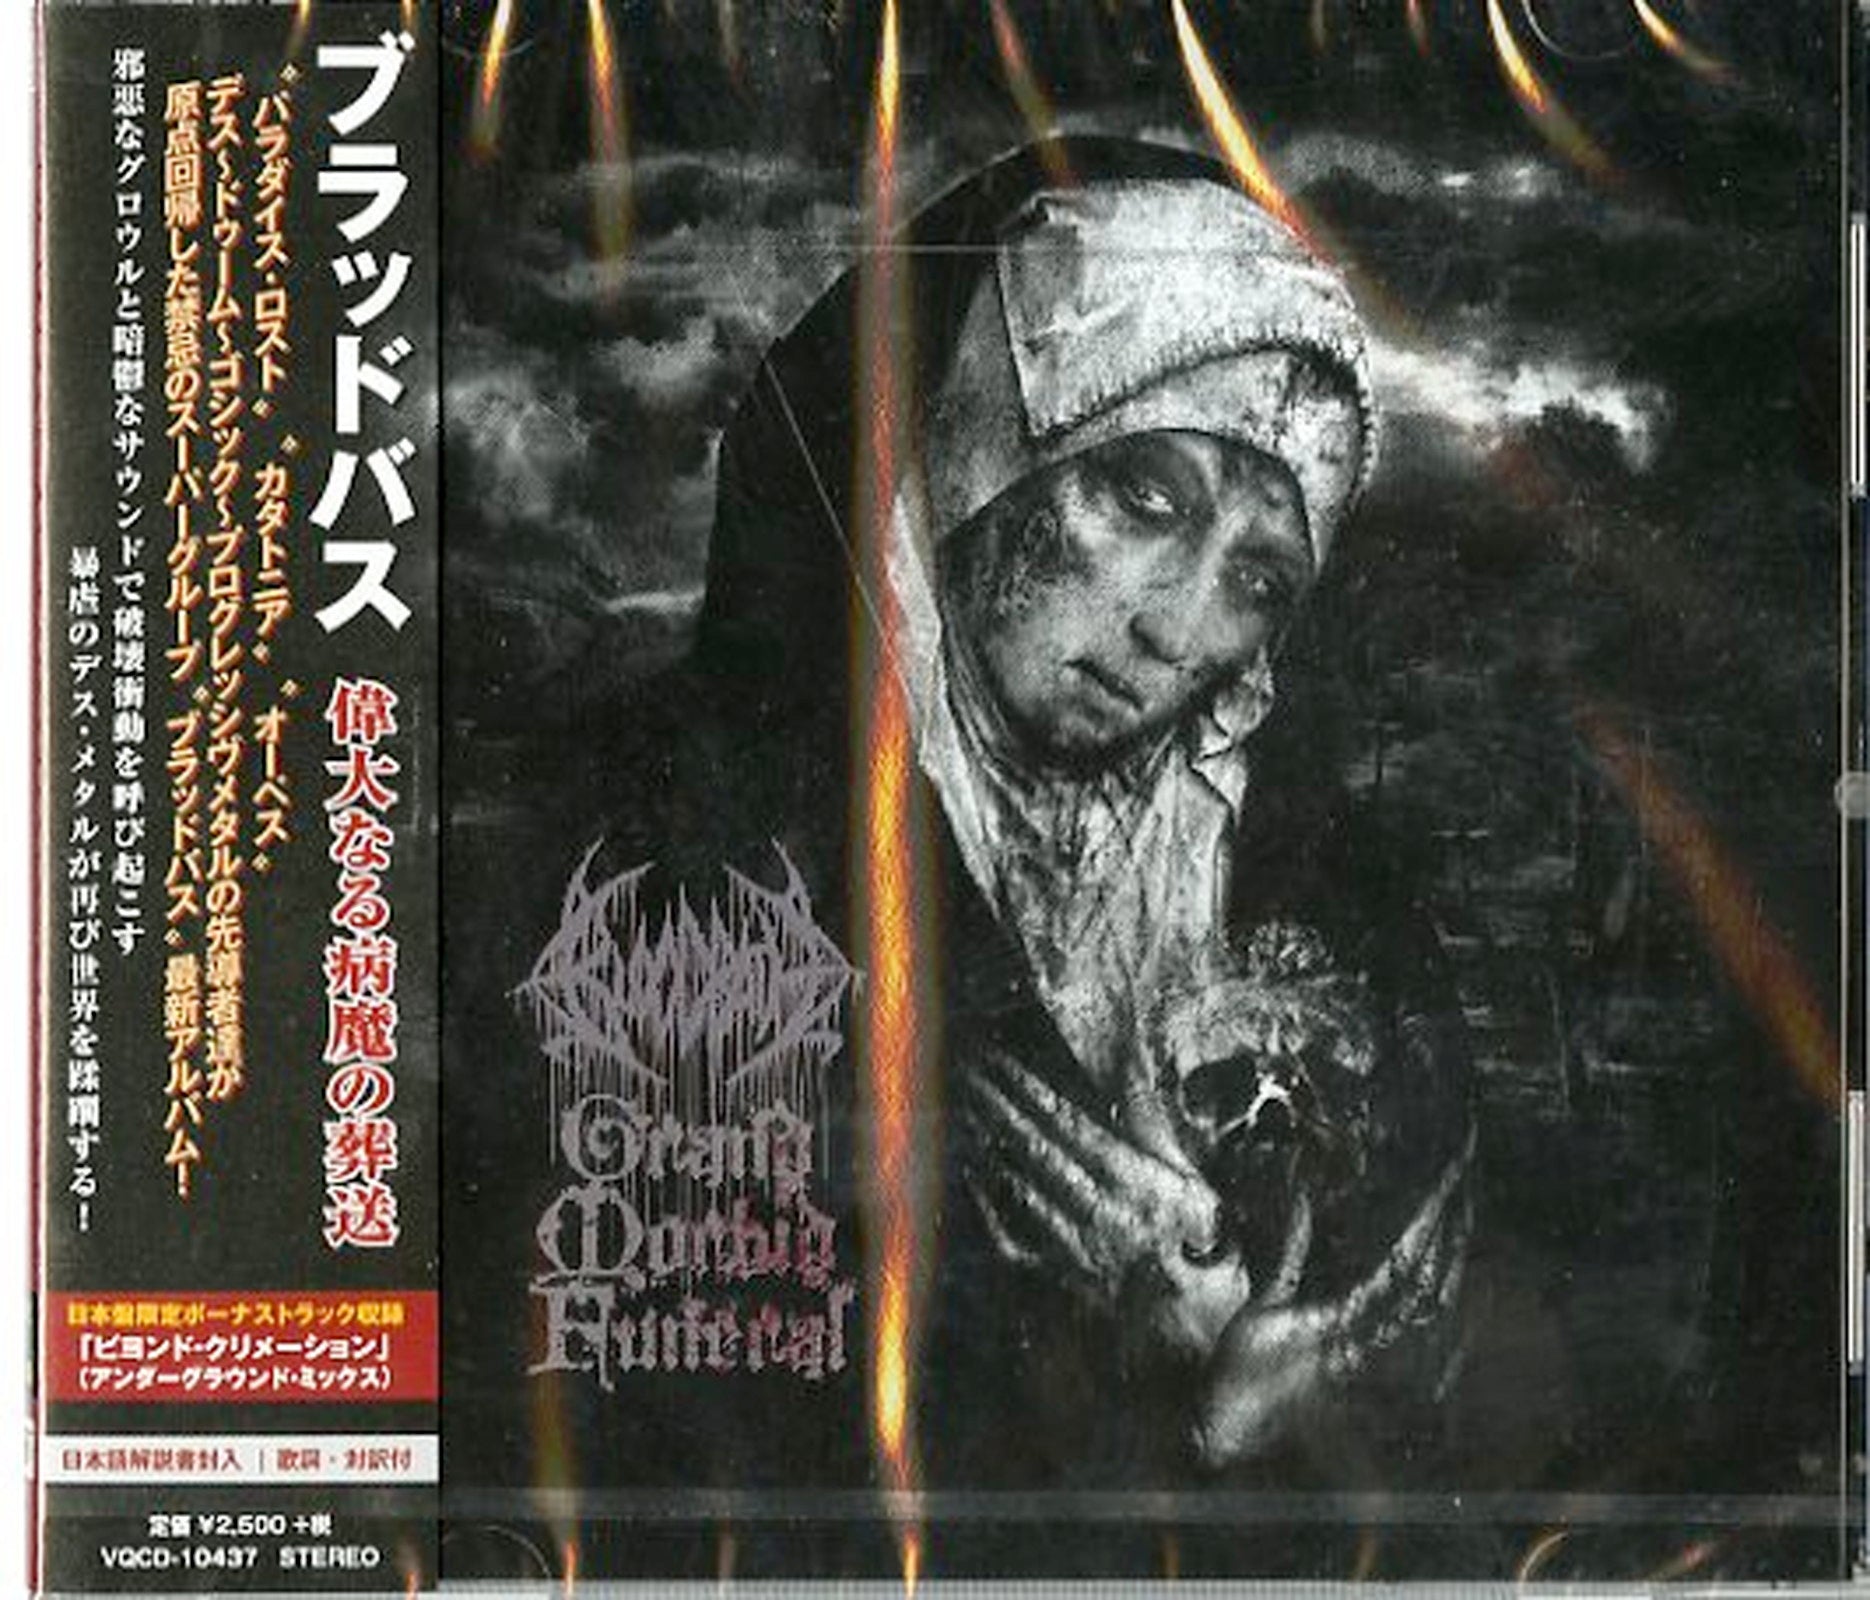 Bloodbath - Grand Morbid Funeral - Japan CD Bonus Track – CDs Vinyl Japan  Store 2015